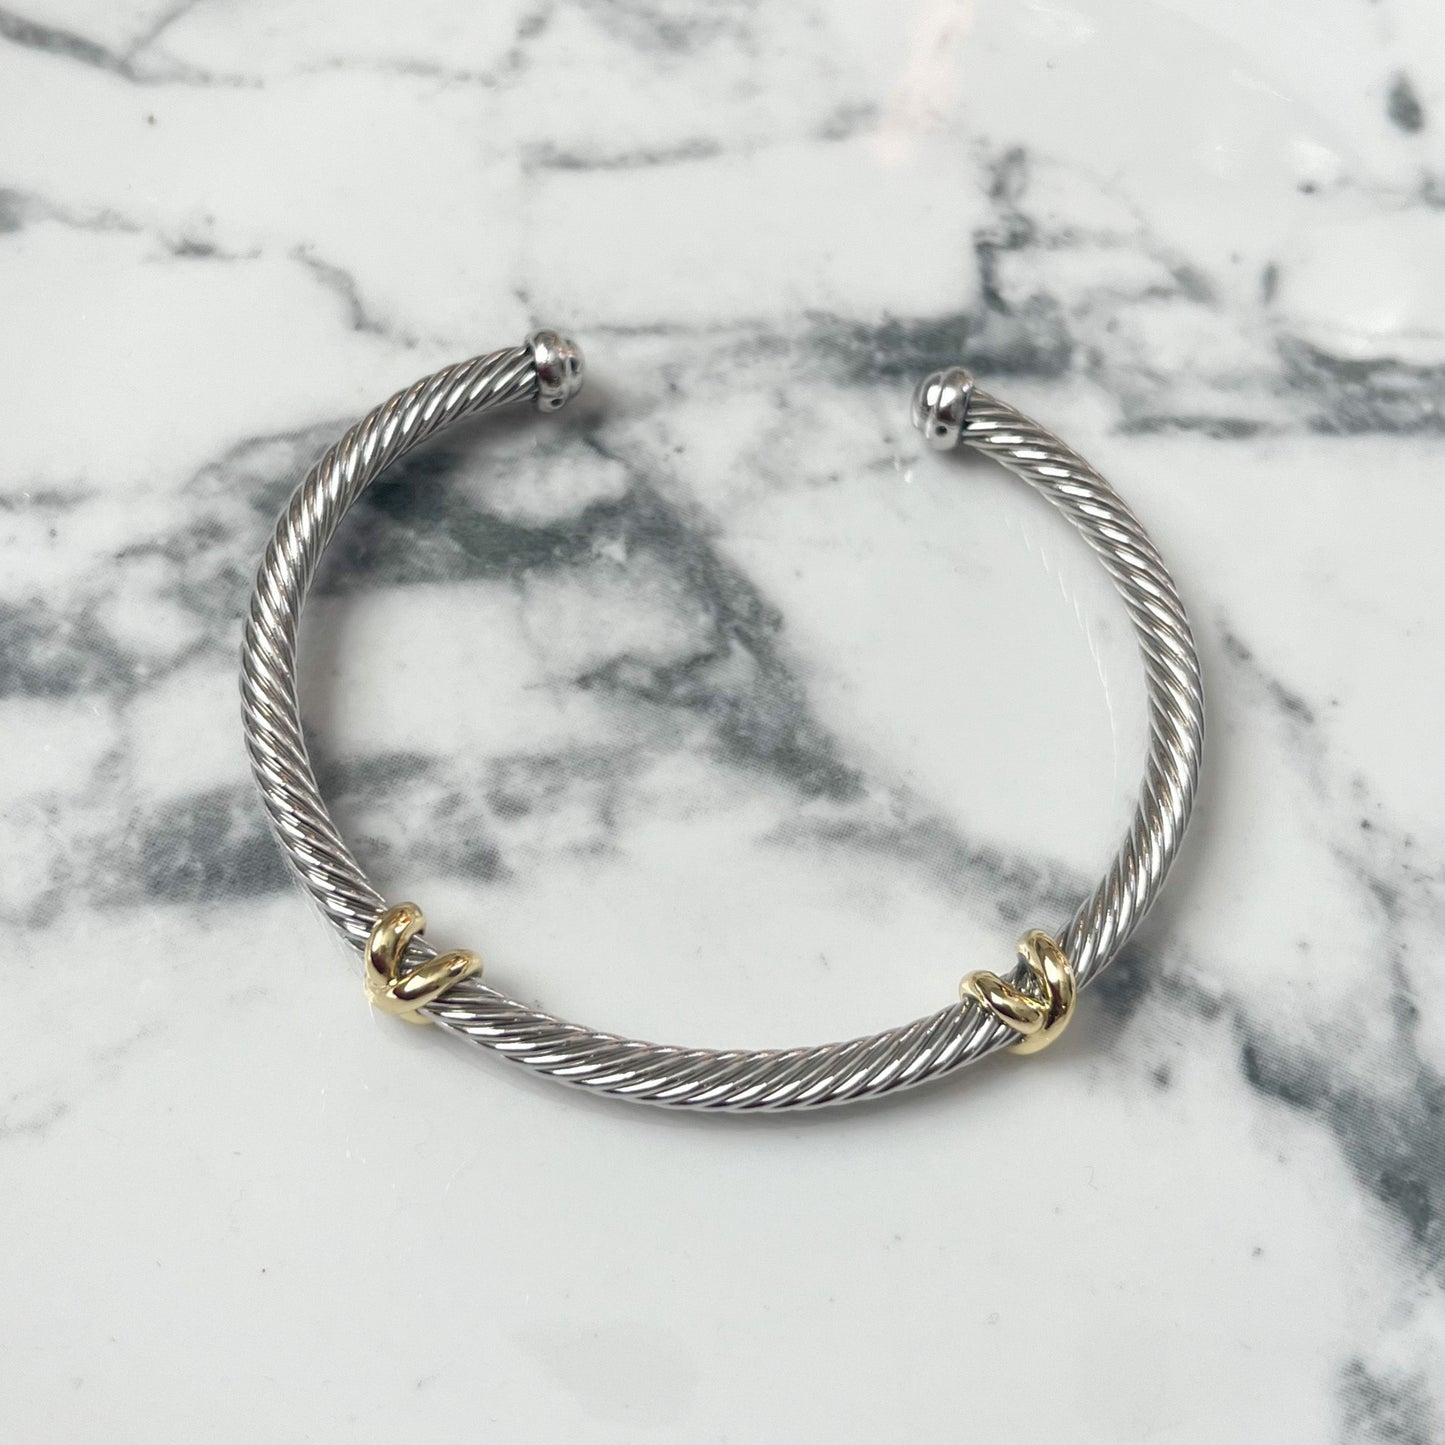 Double Crossed Silver and Gold Designer Inspired Bracelet